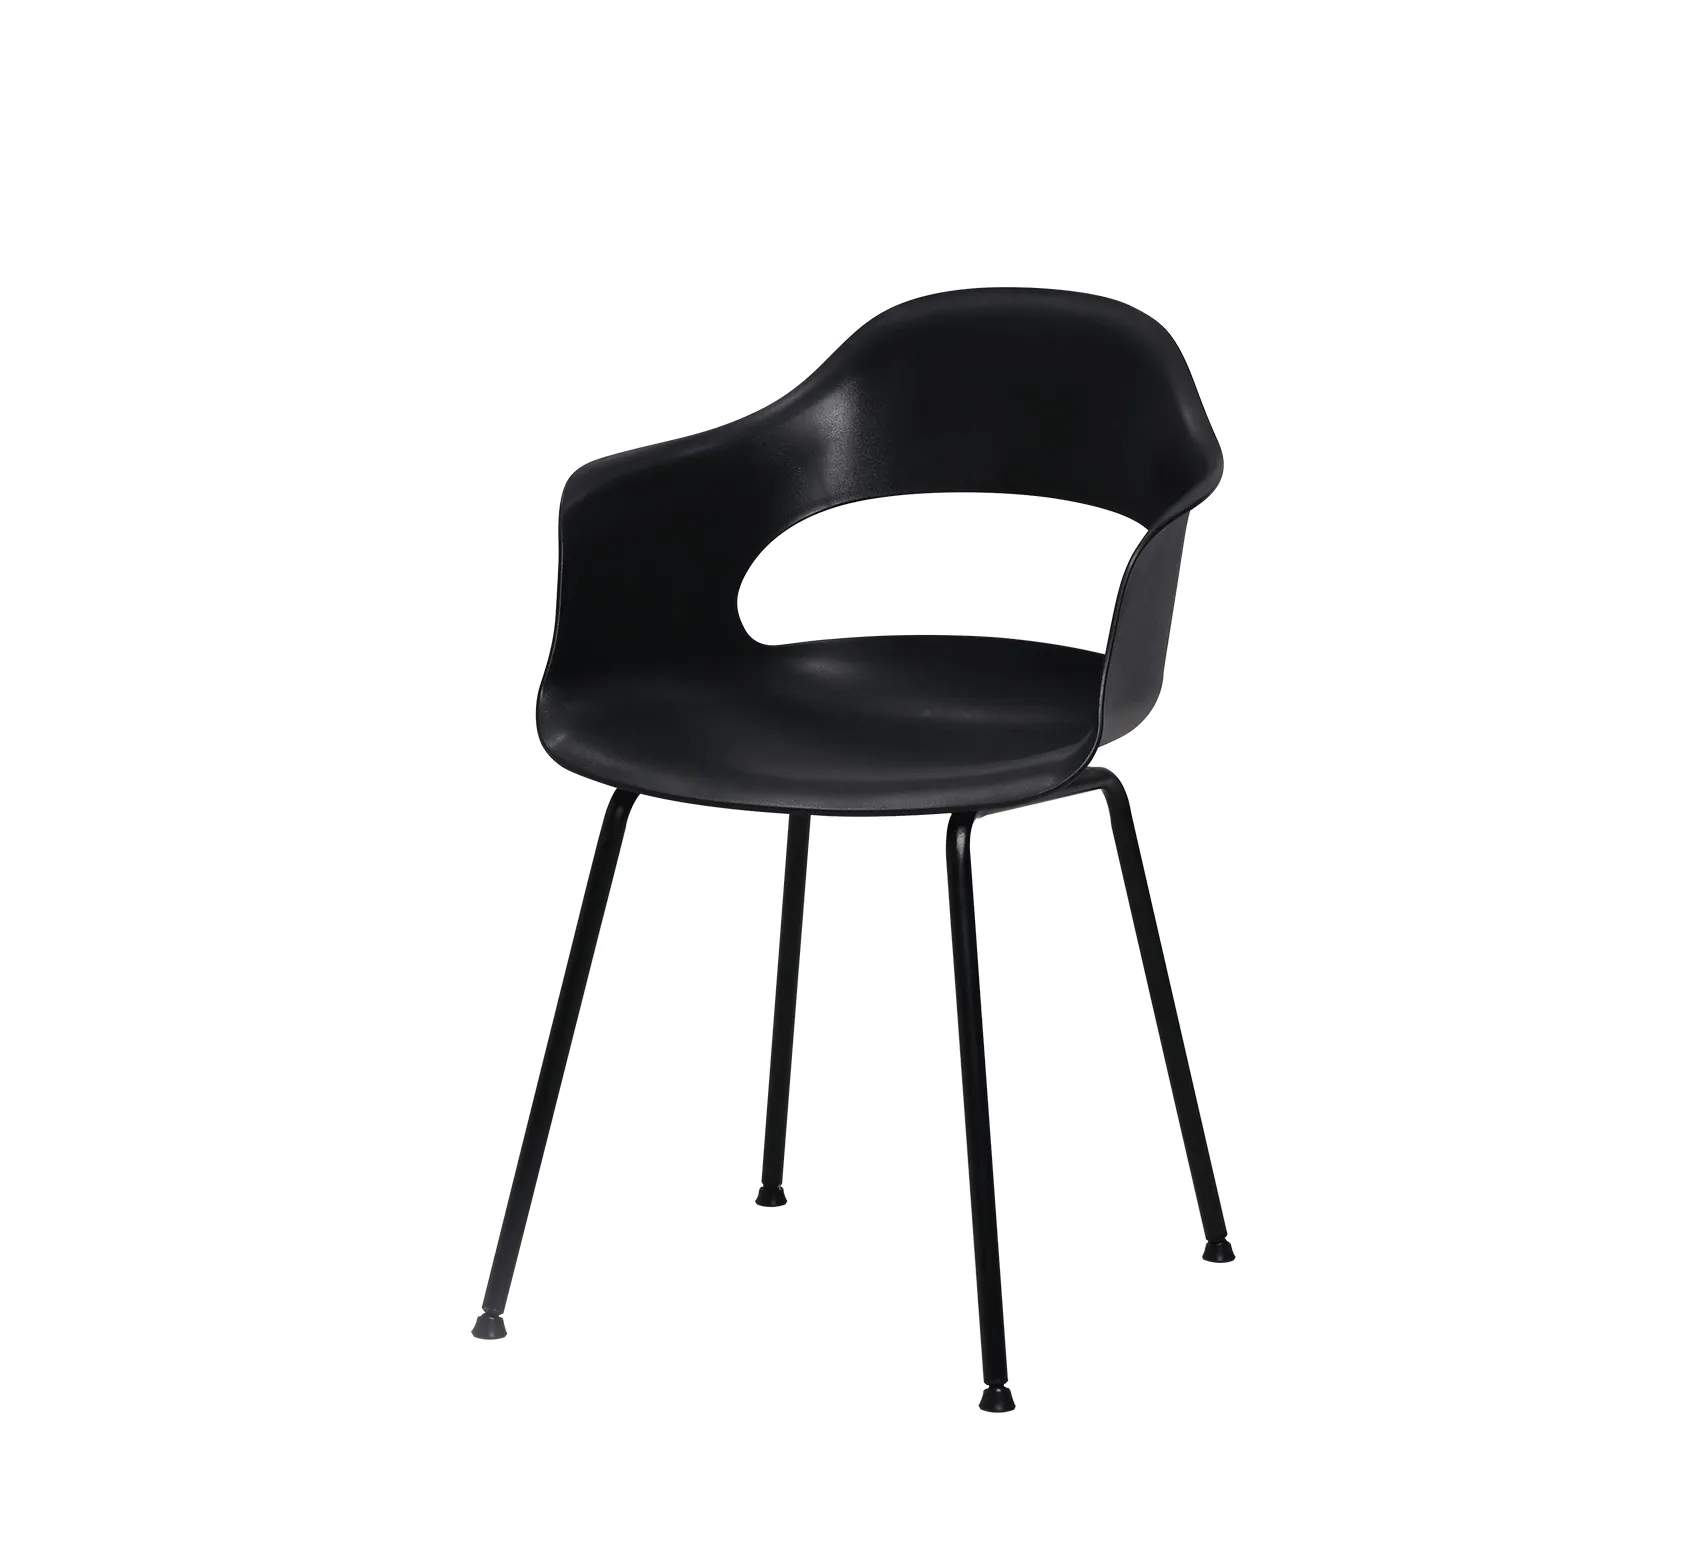 Olymplast Avanty Chair C - BLACK